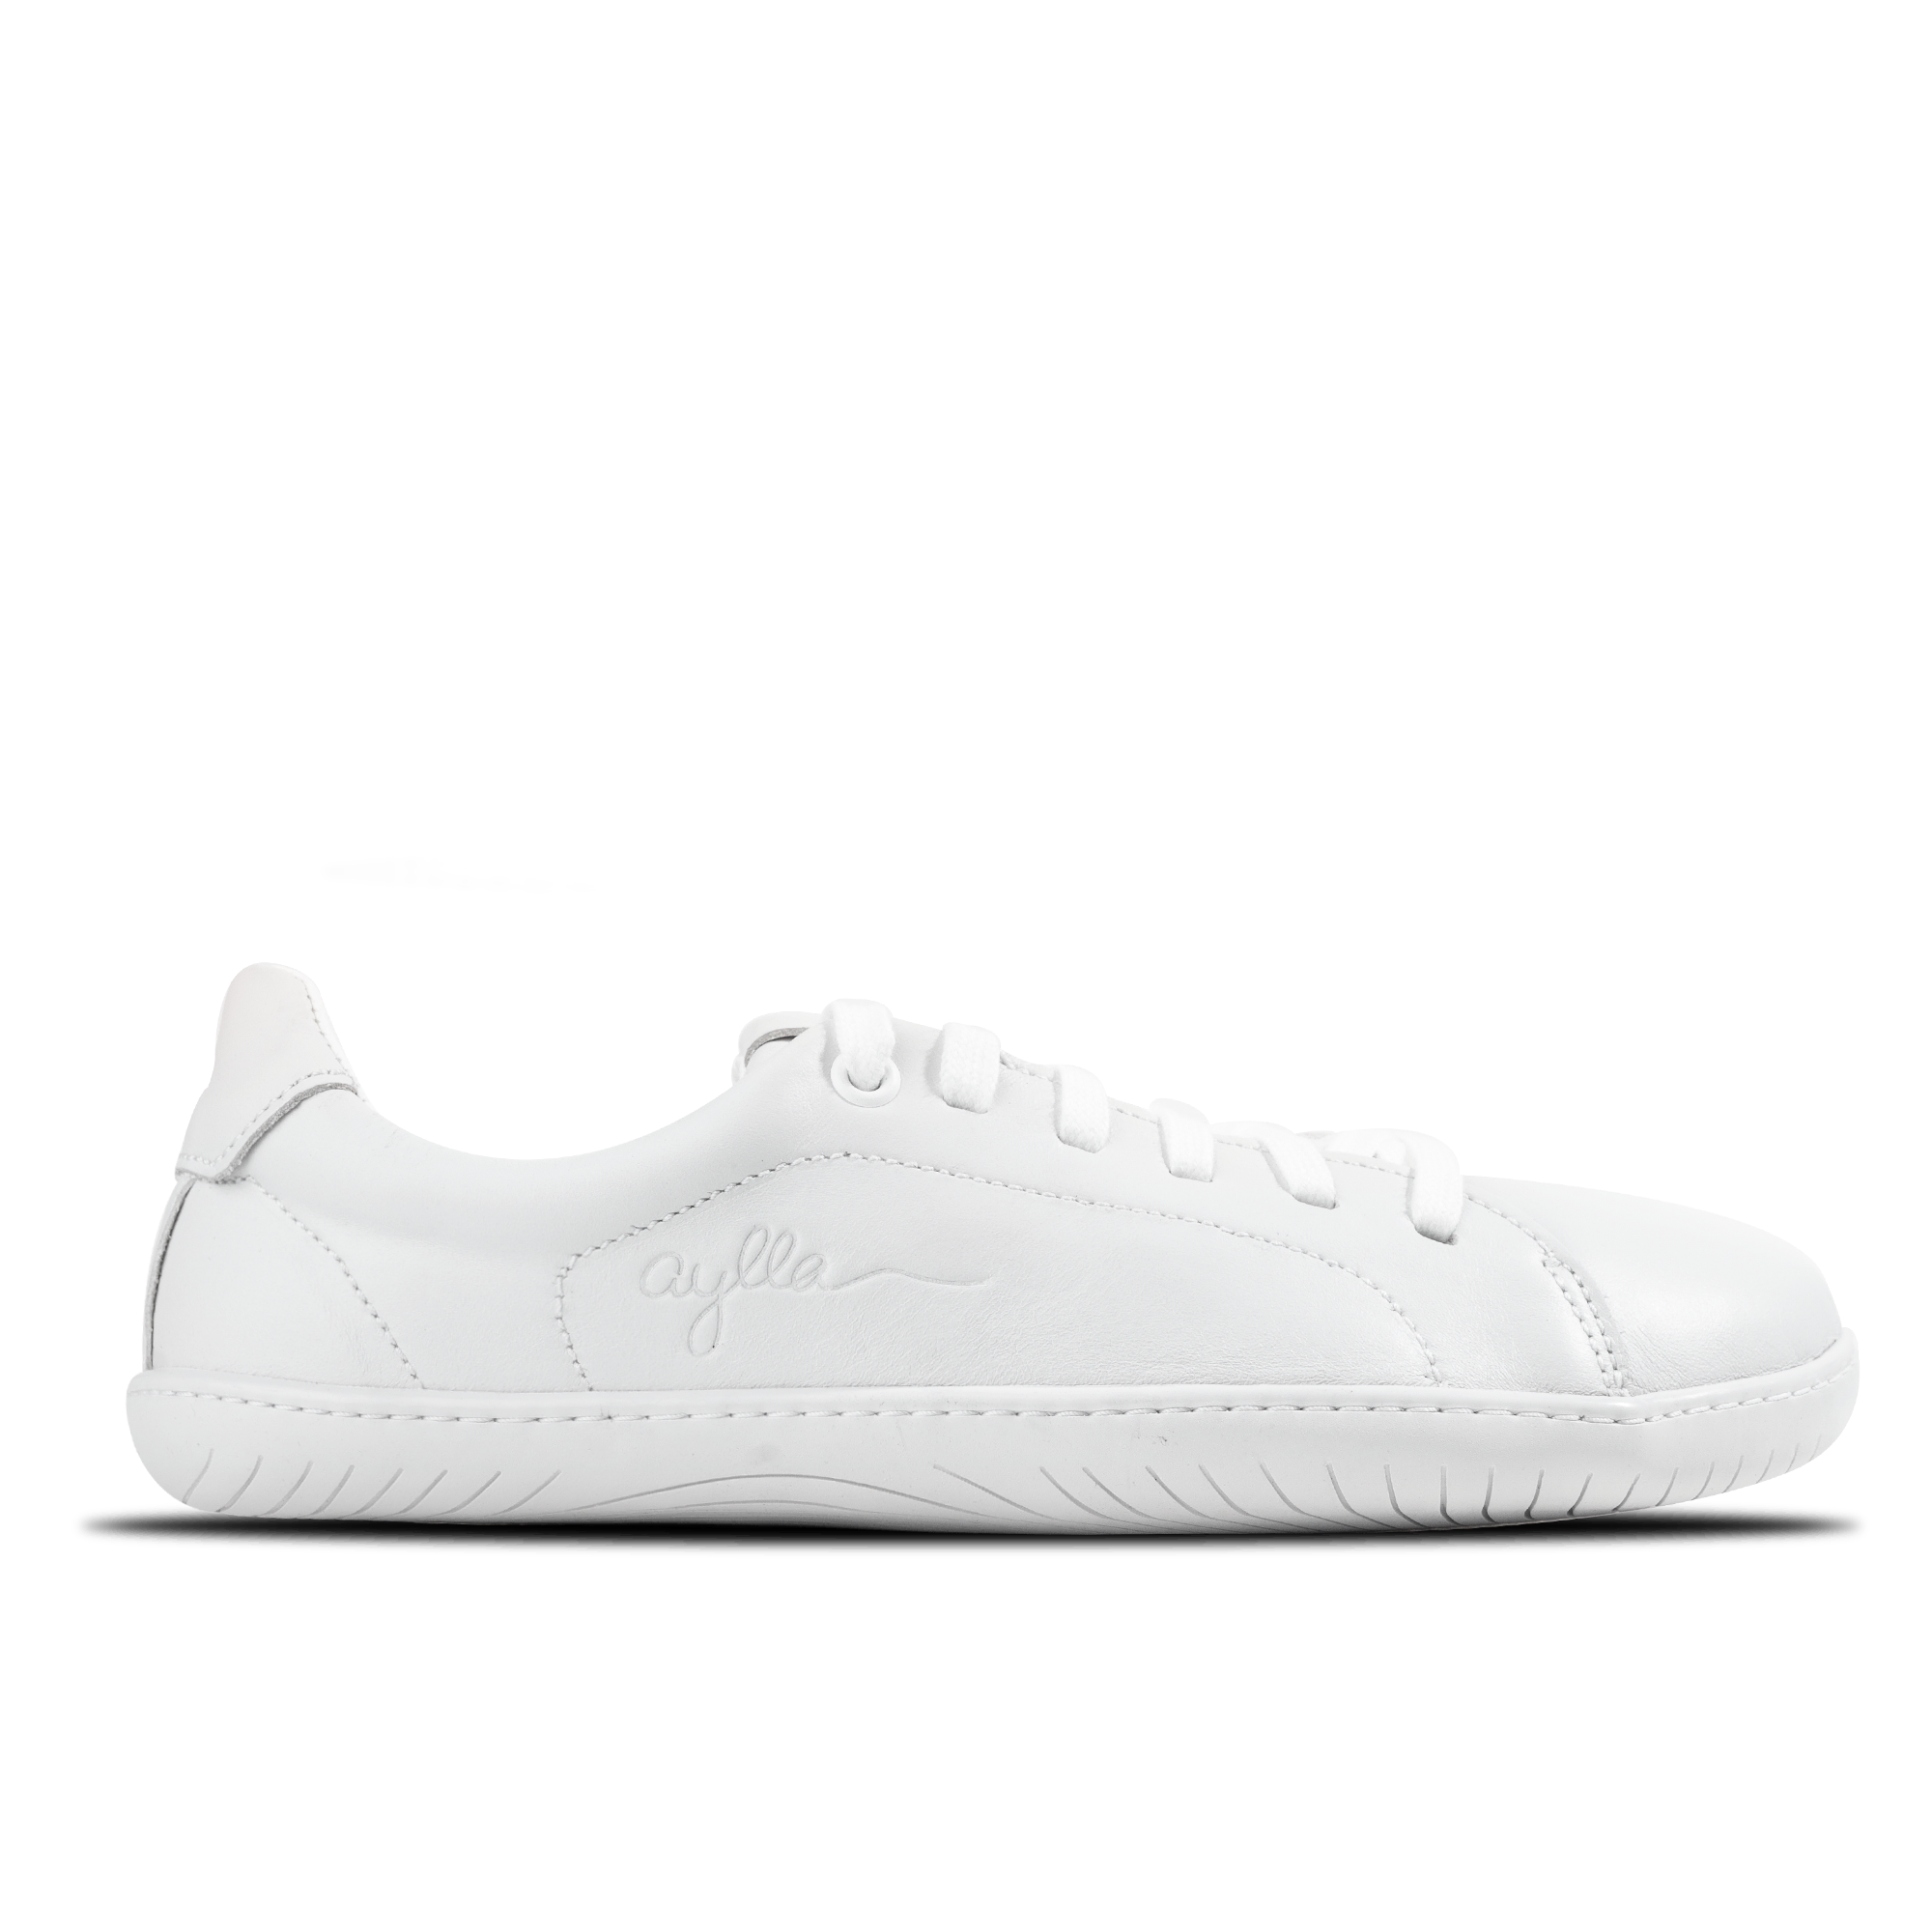 Aylla Keck Womens barfods sneakers i læder til kvinder i farven white / white, yderside